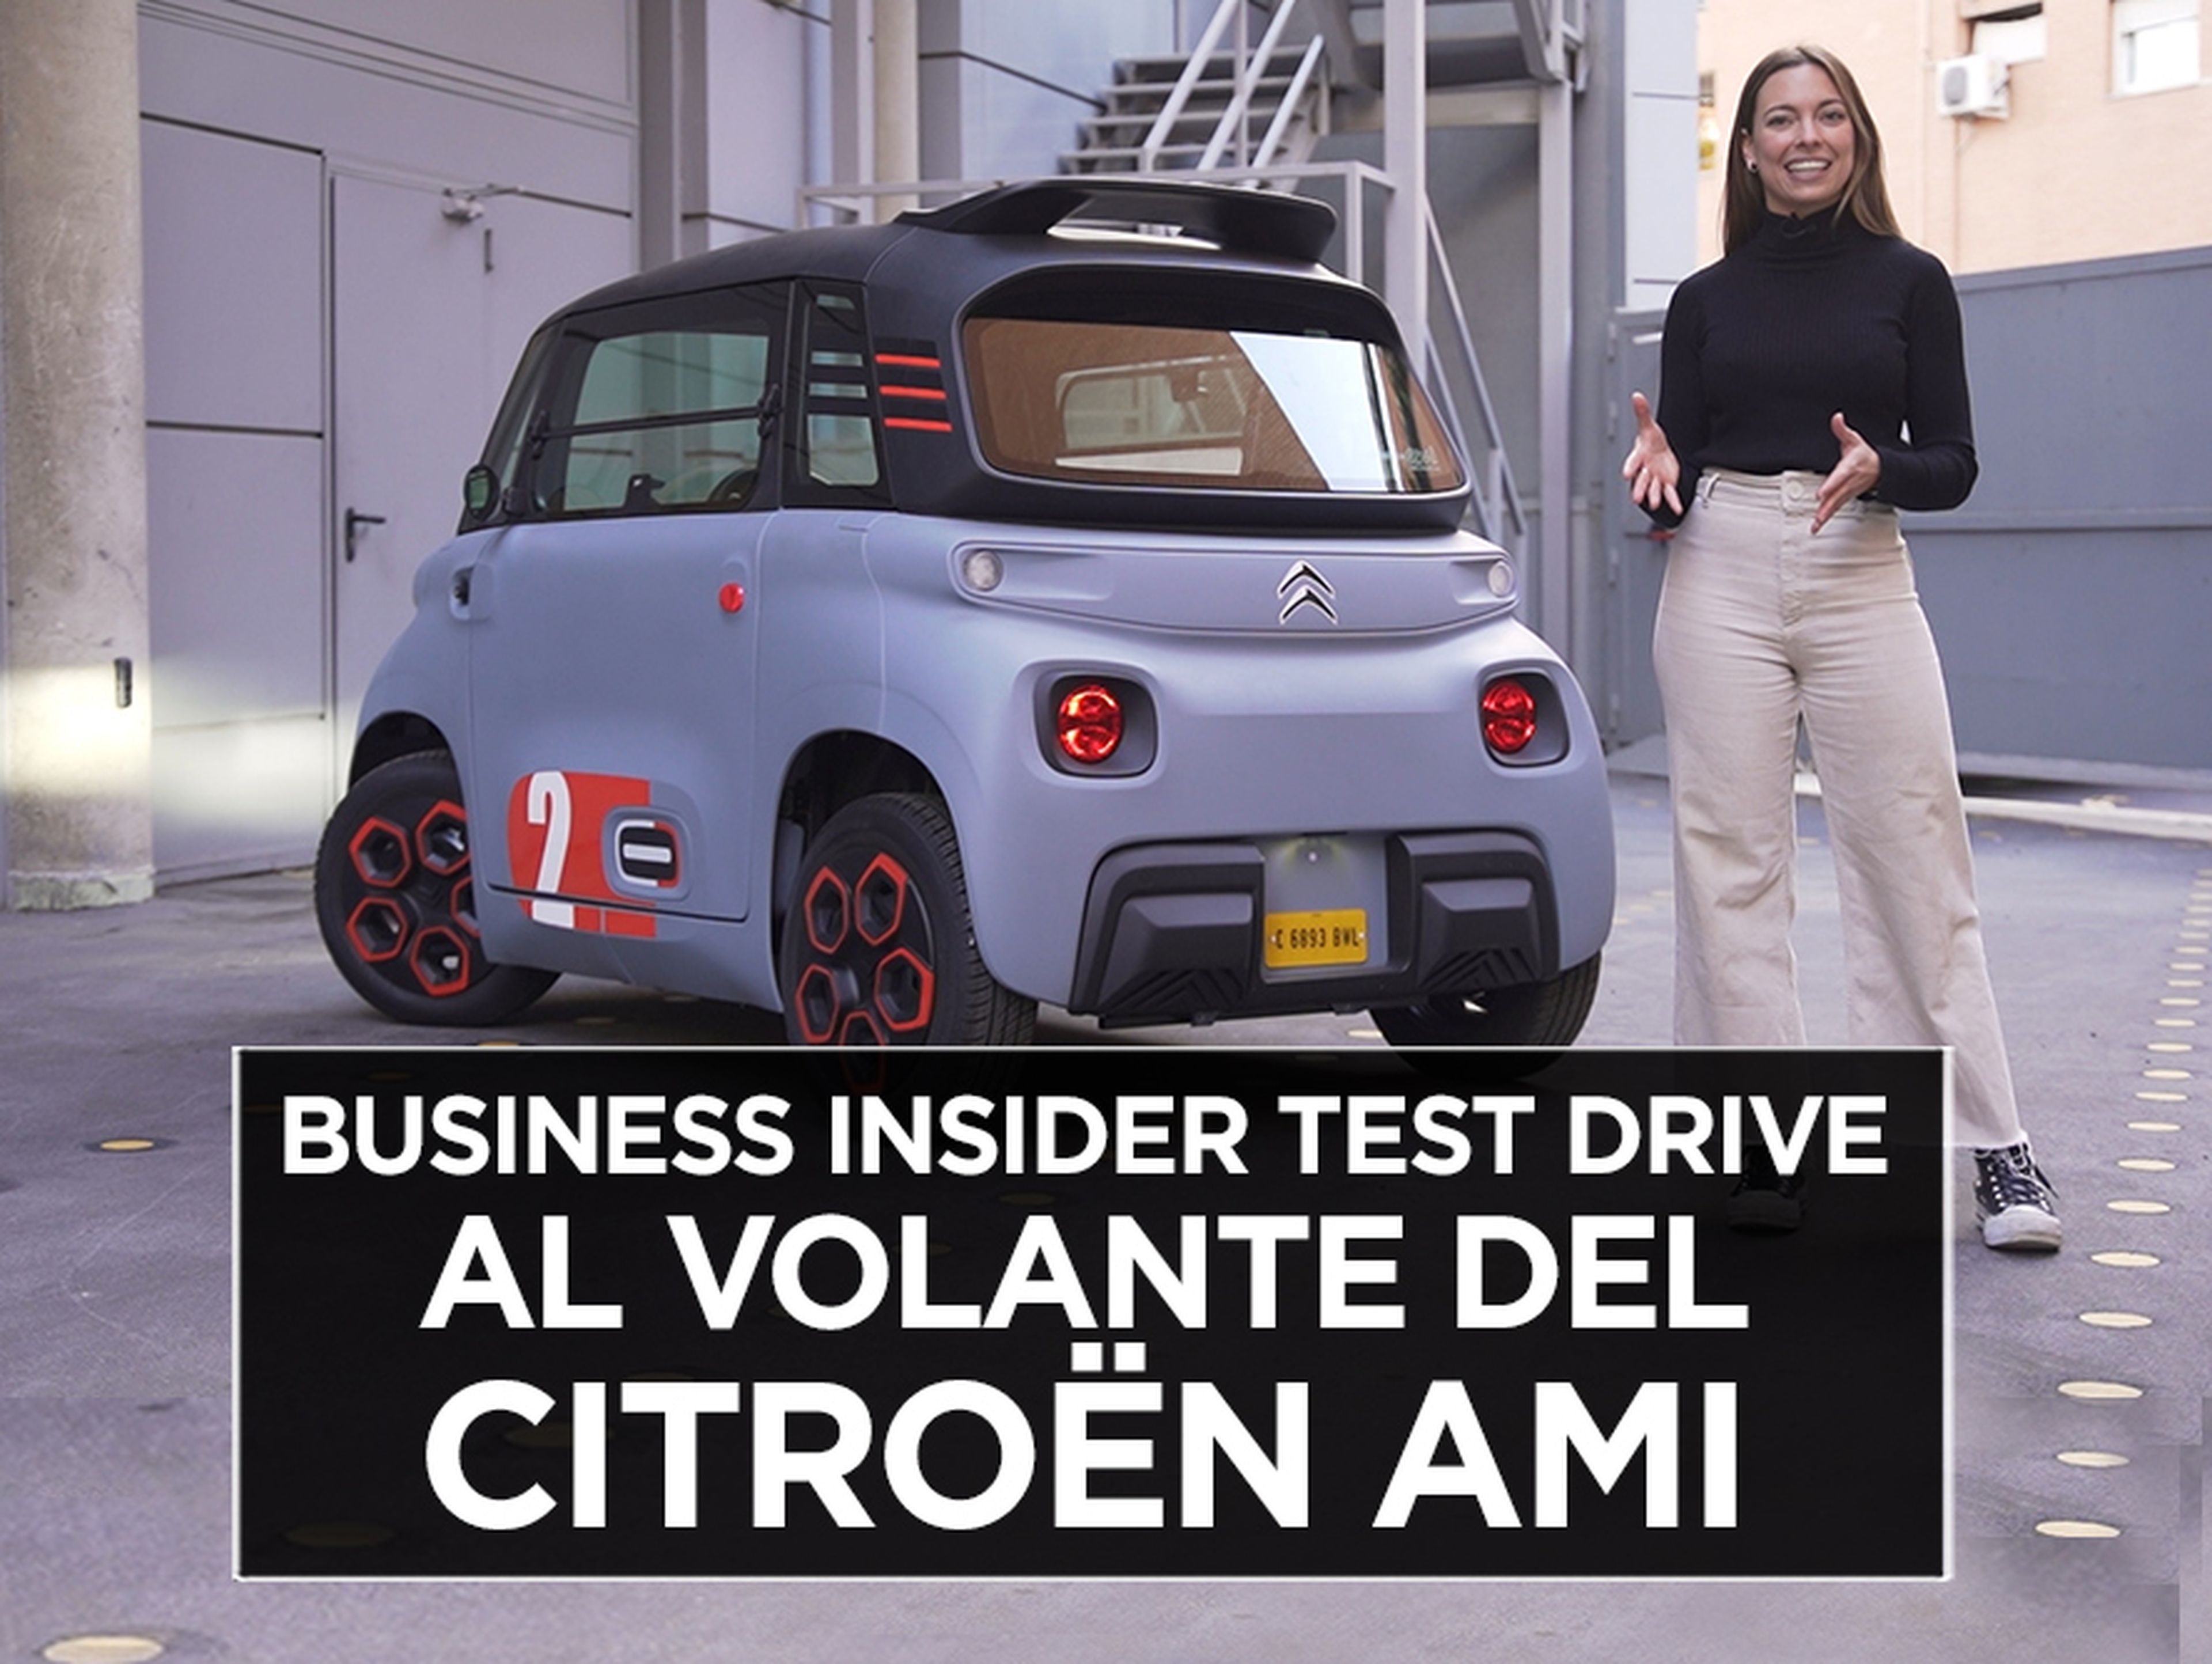 Video Citroën Ami - Business Insider Test Drive - imagen destacado